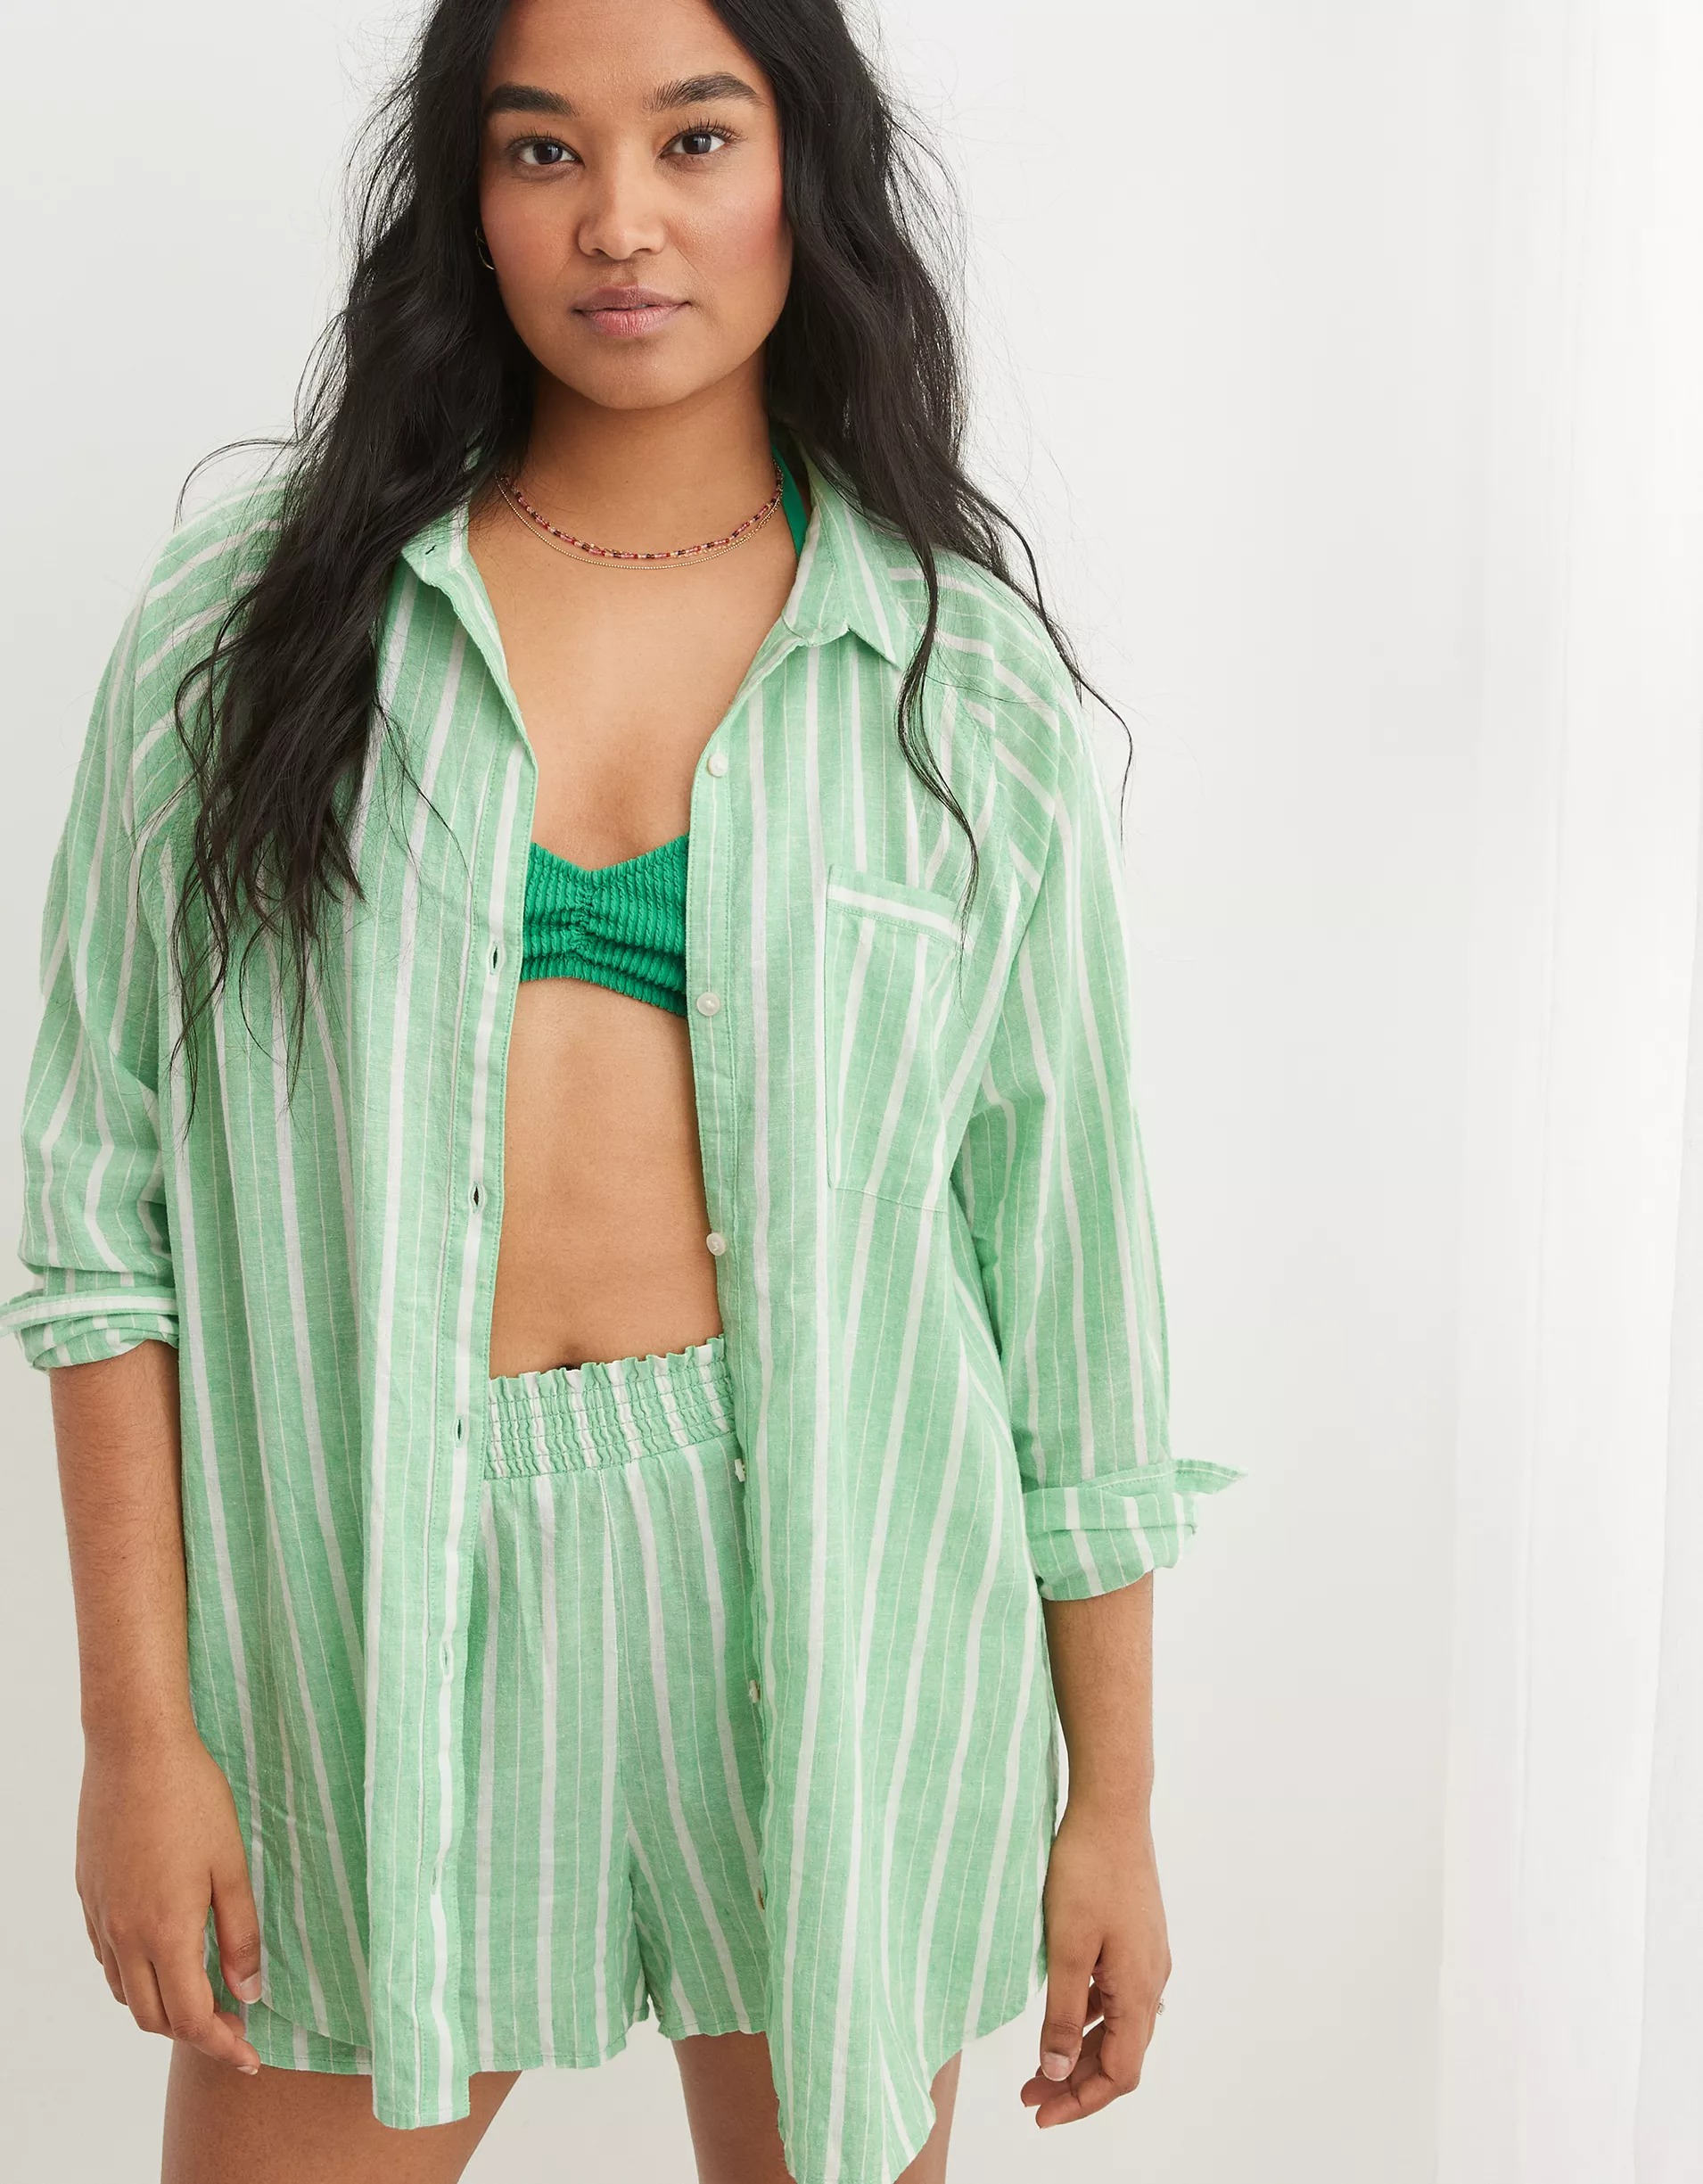 Model wearing green striped matching short set